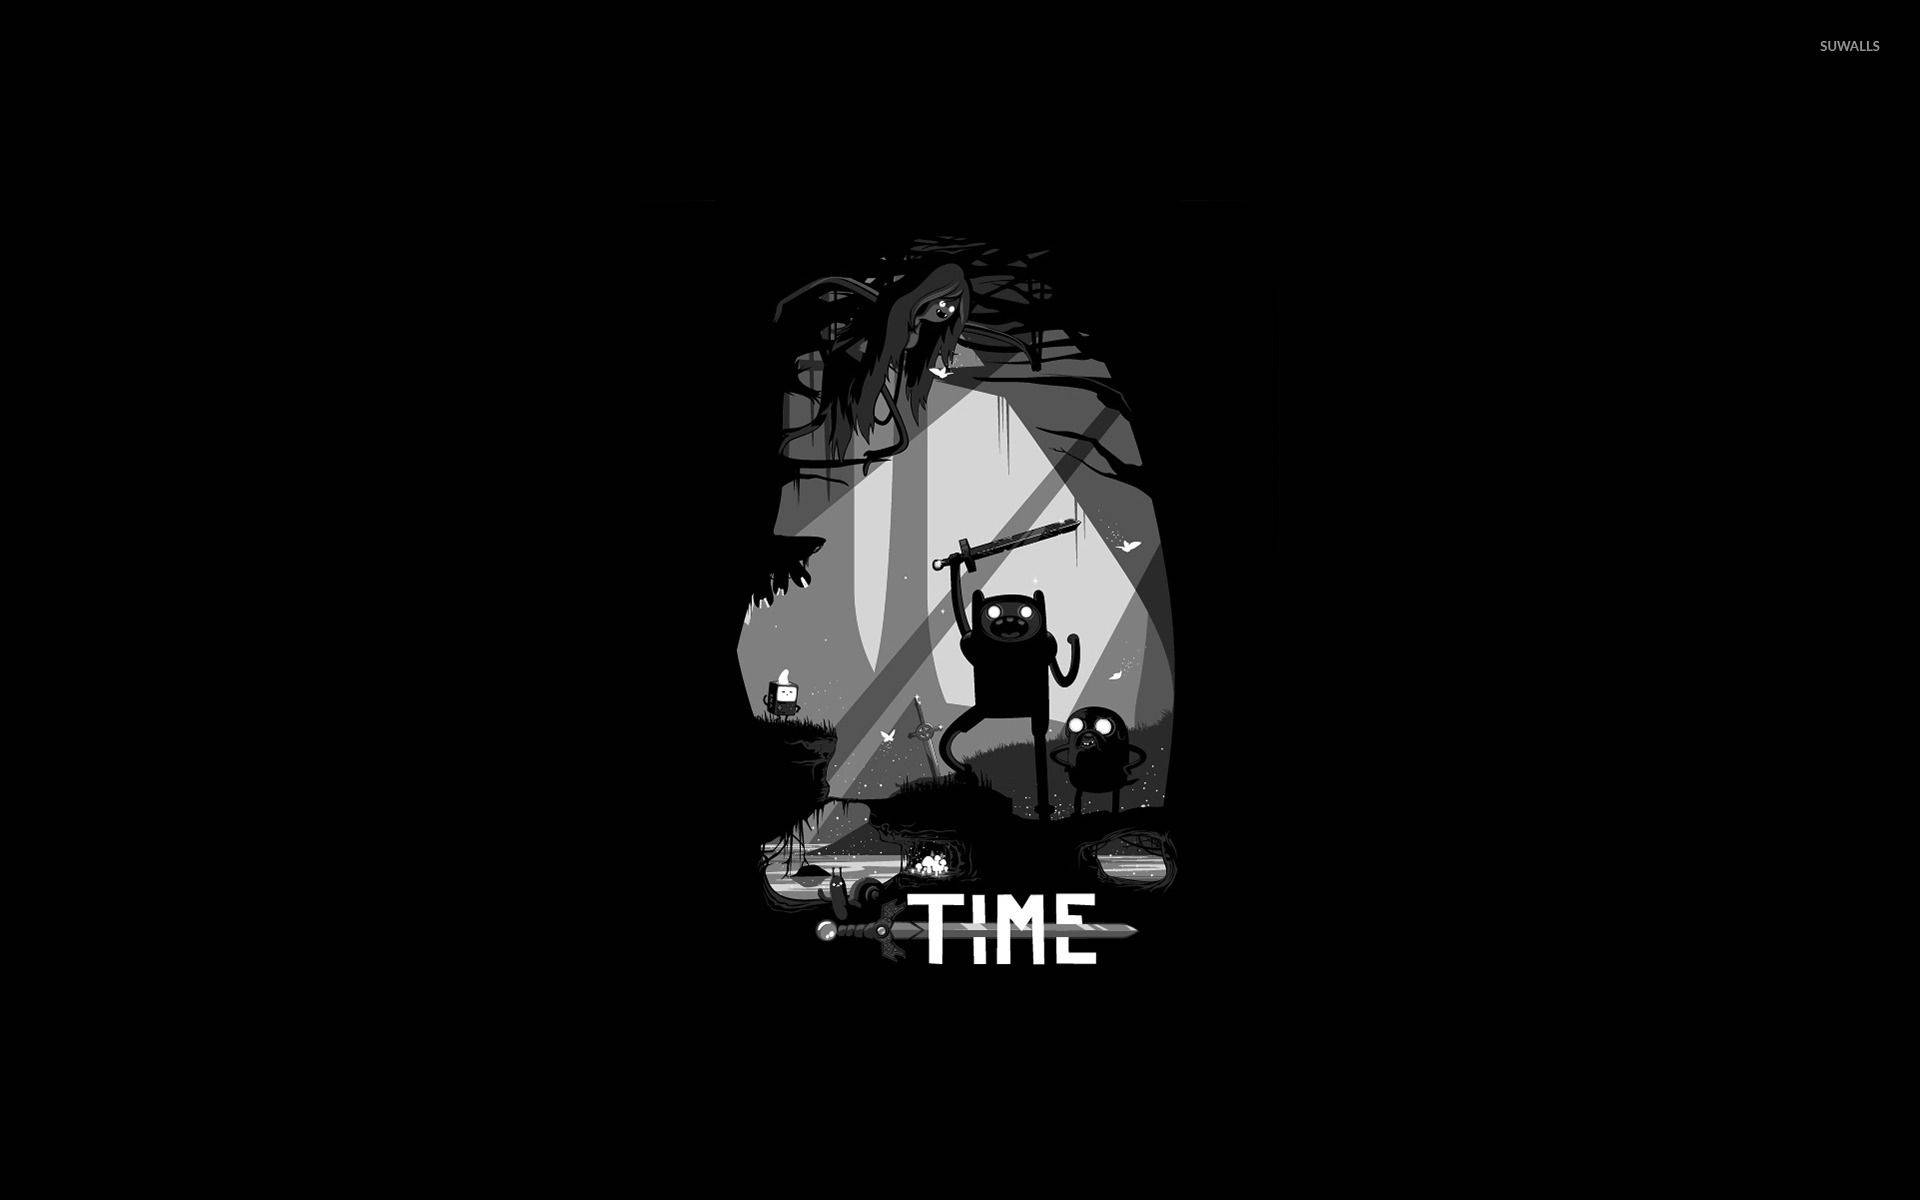 Free Adventure Time Wallpaper Downloads, [100+] Adventure Time Wallpapers  for FREE 